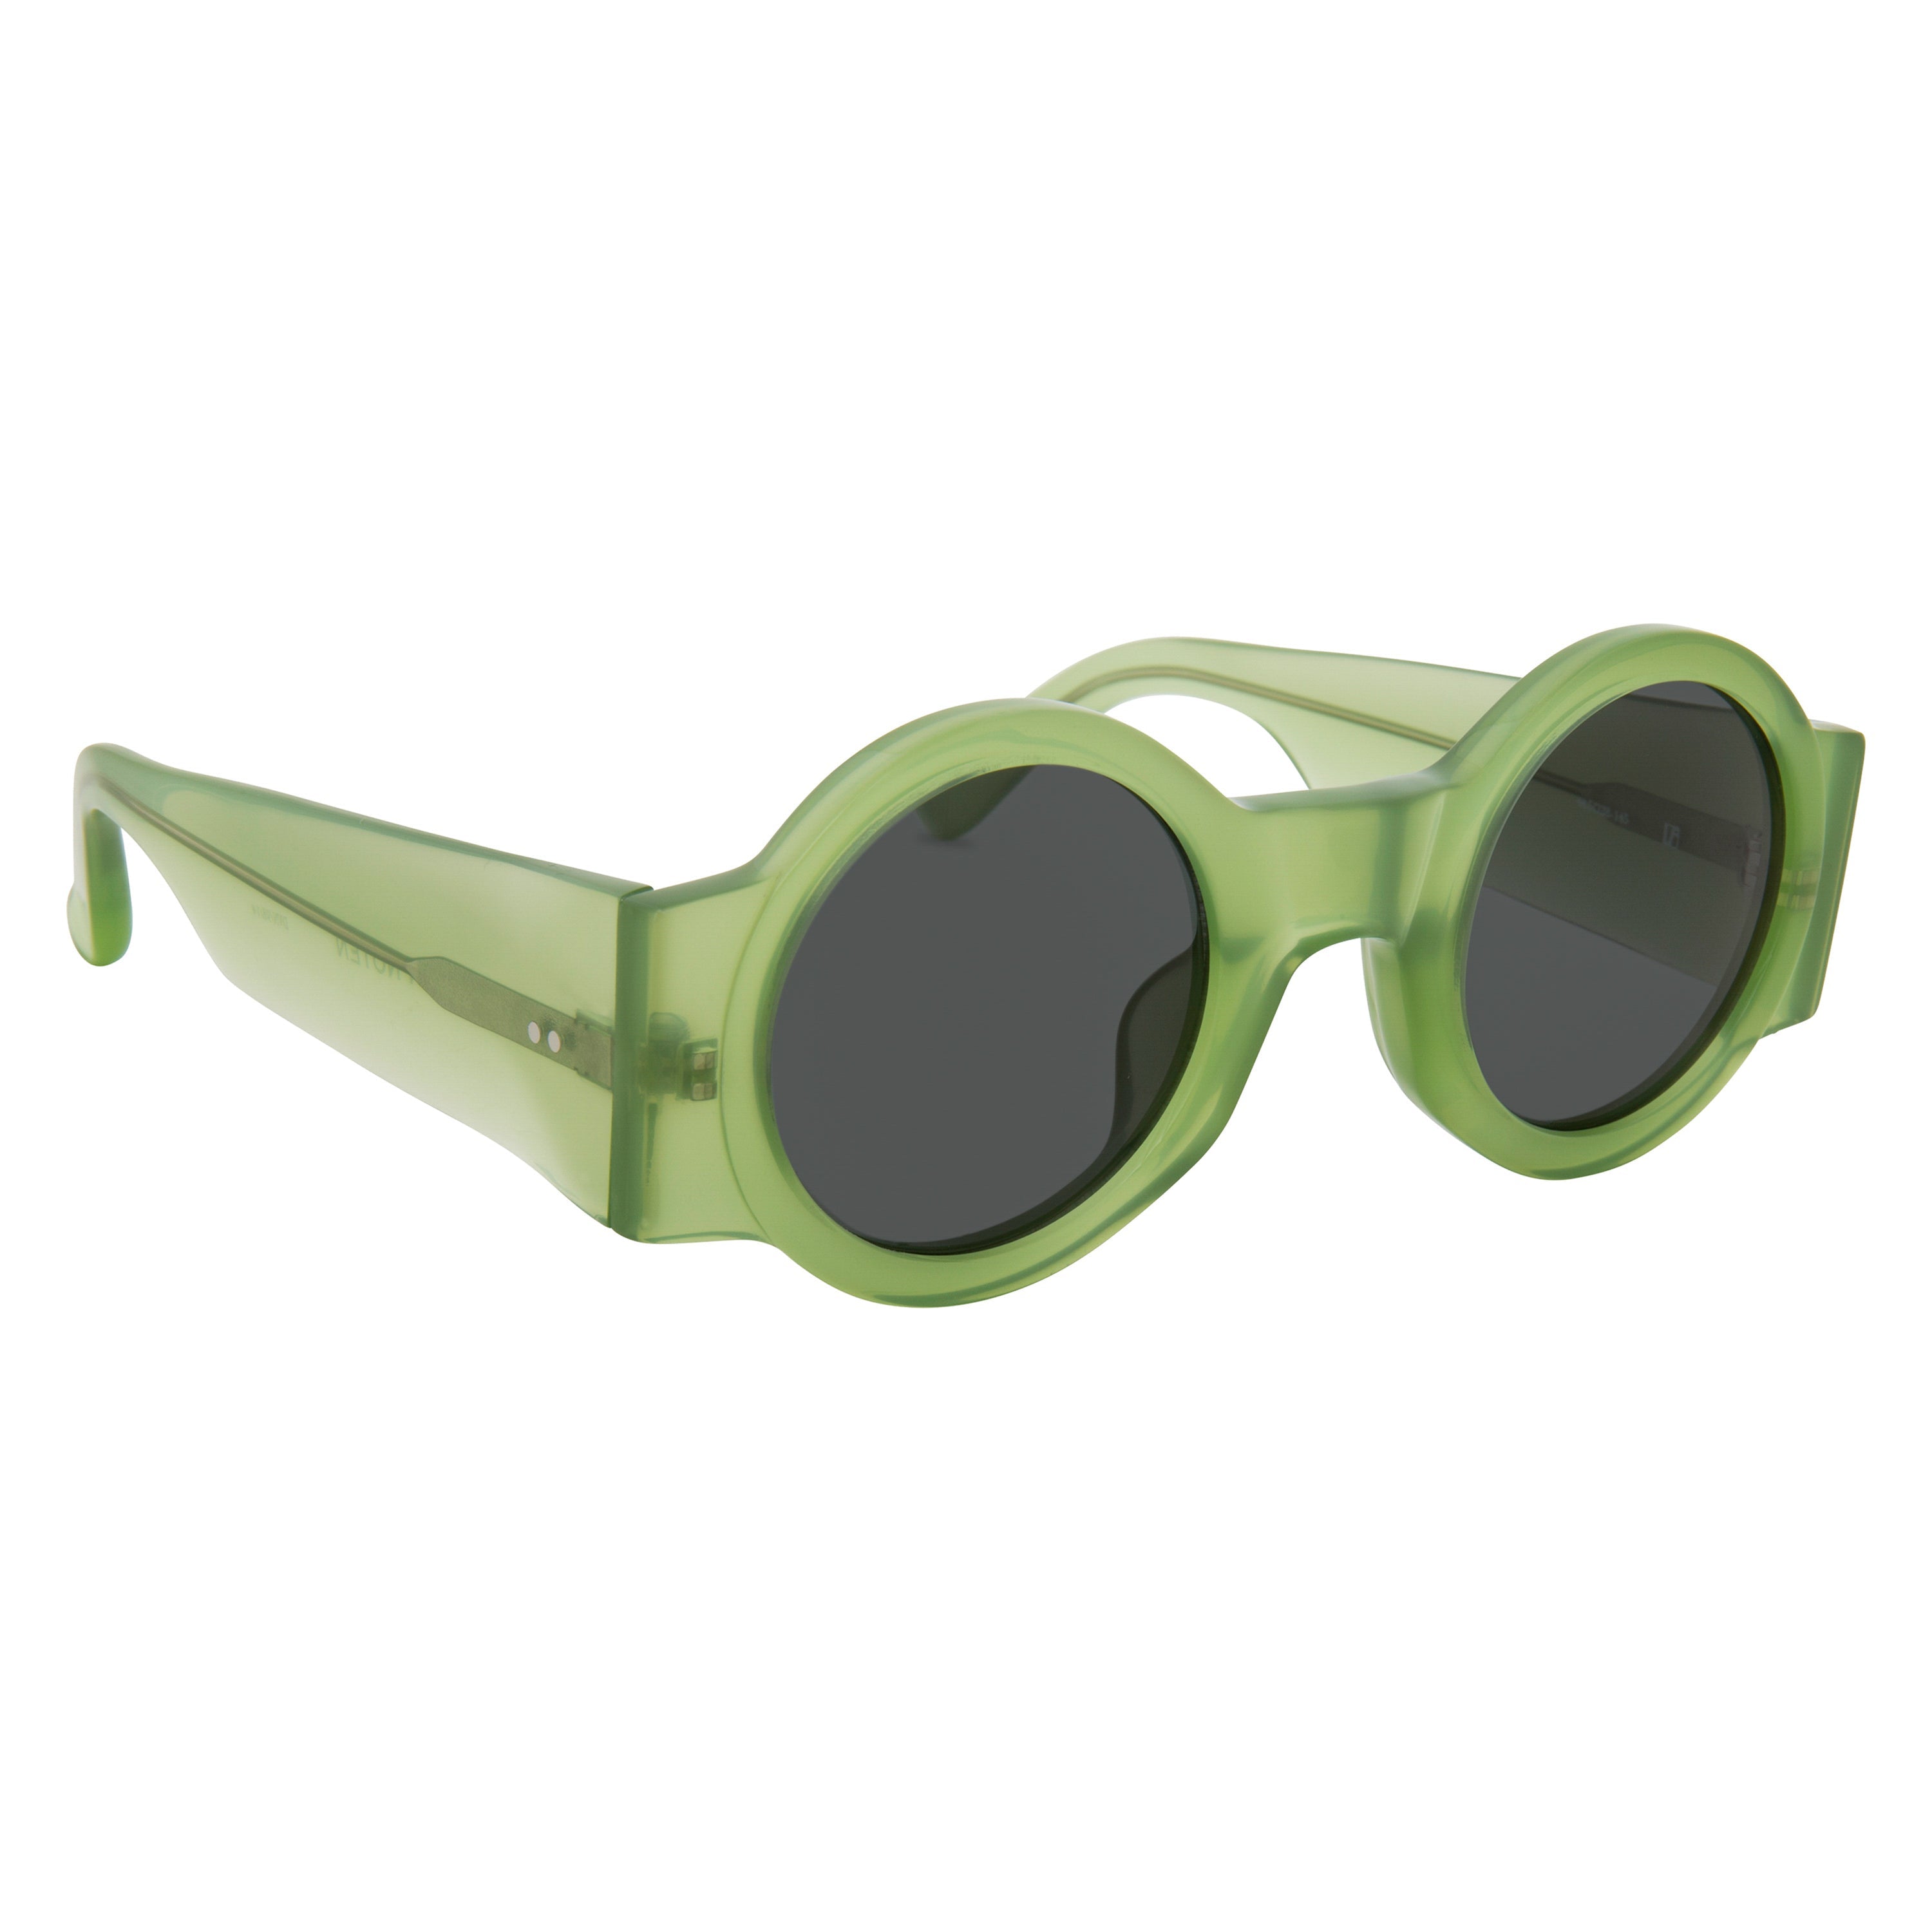 Dries van Noten 98 C14 Round Sunglasses – LINDA FARROW (INT'L)